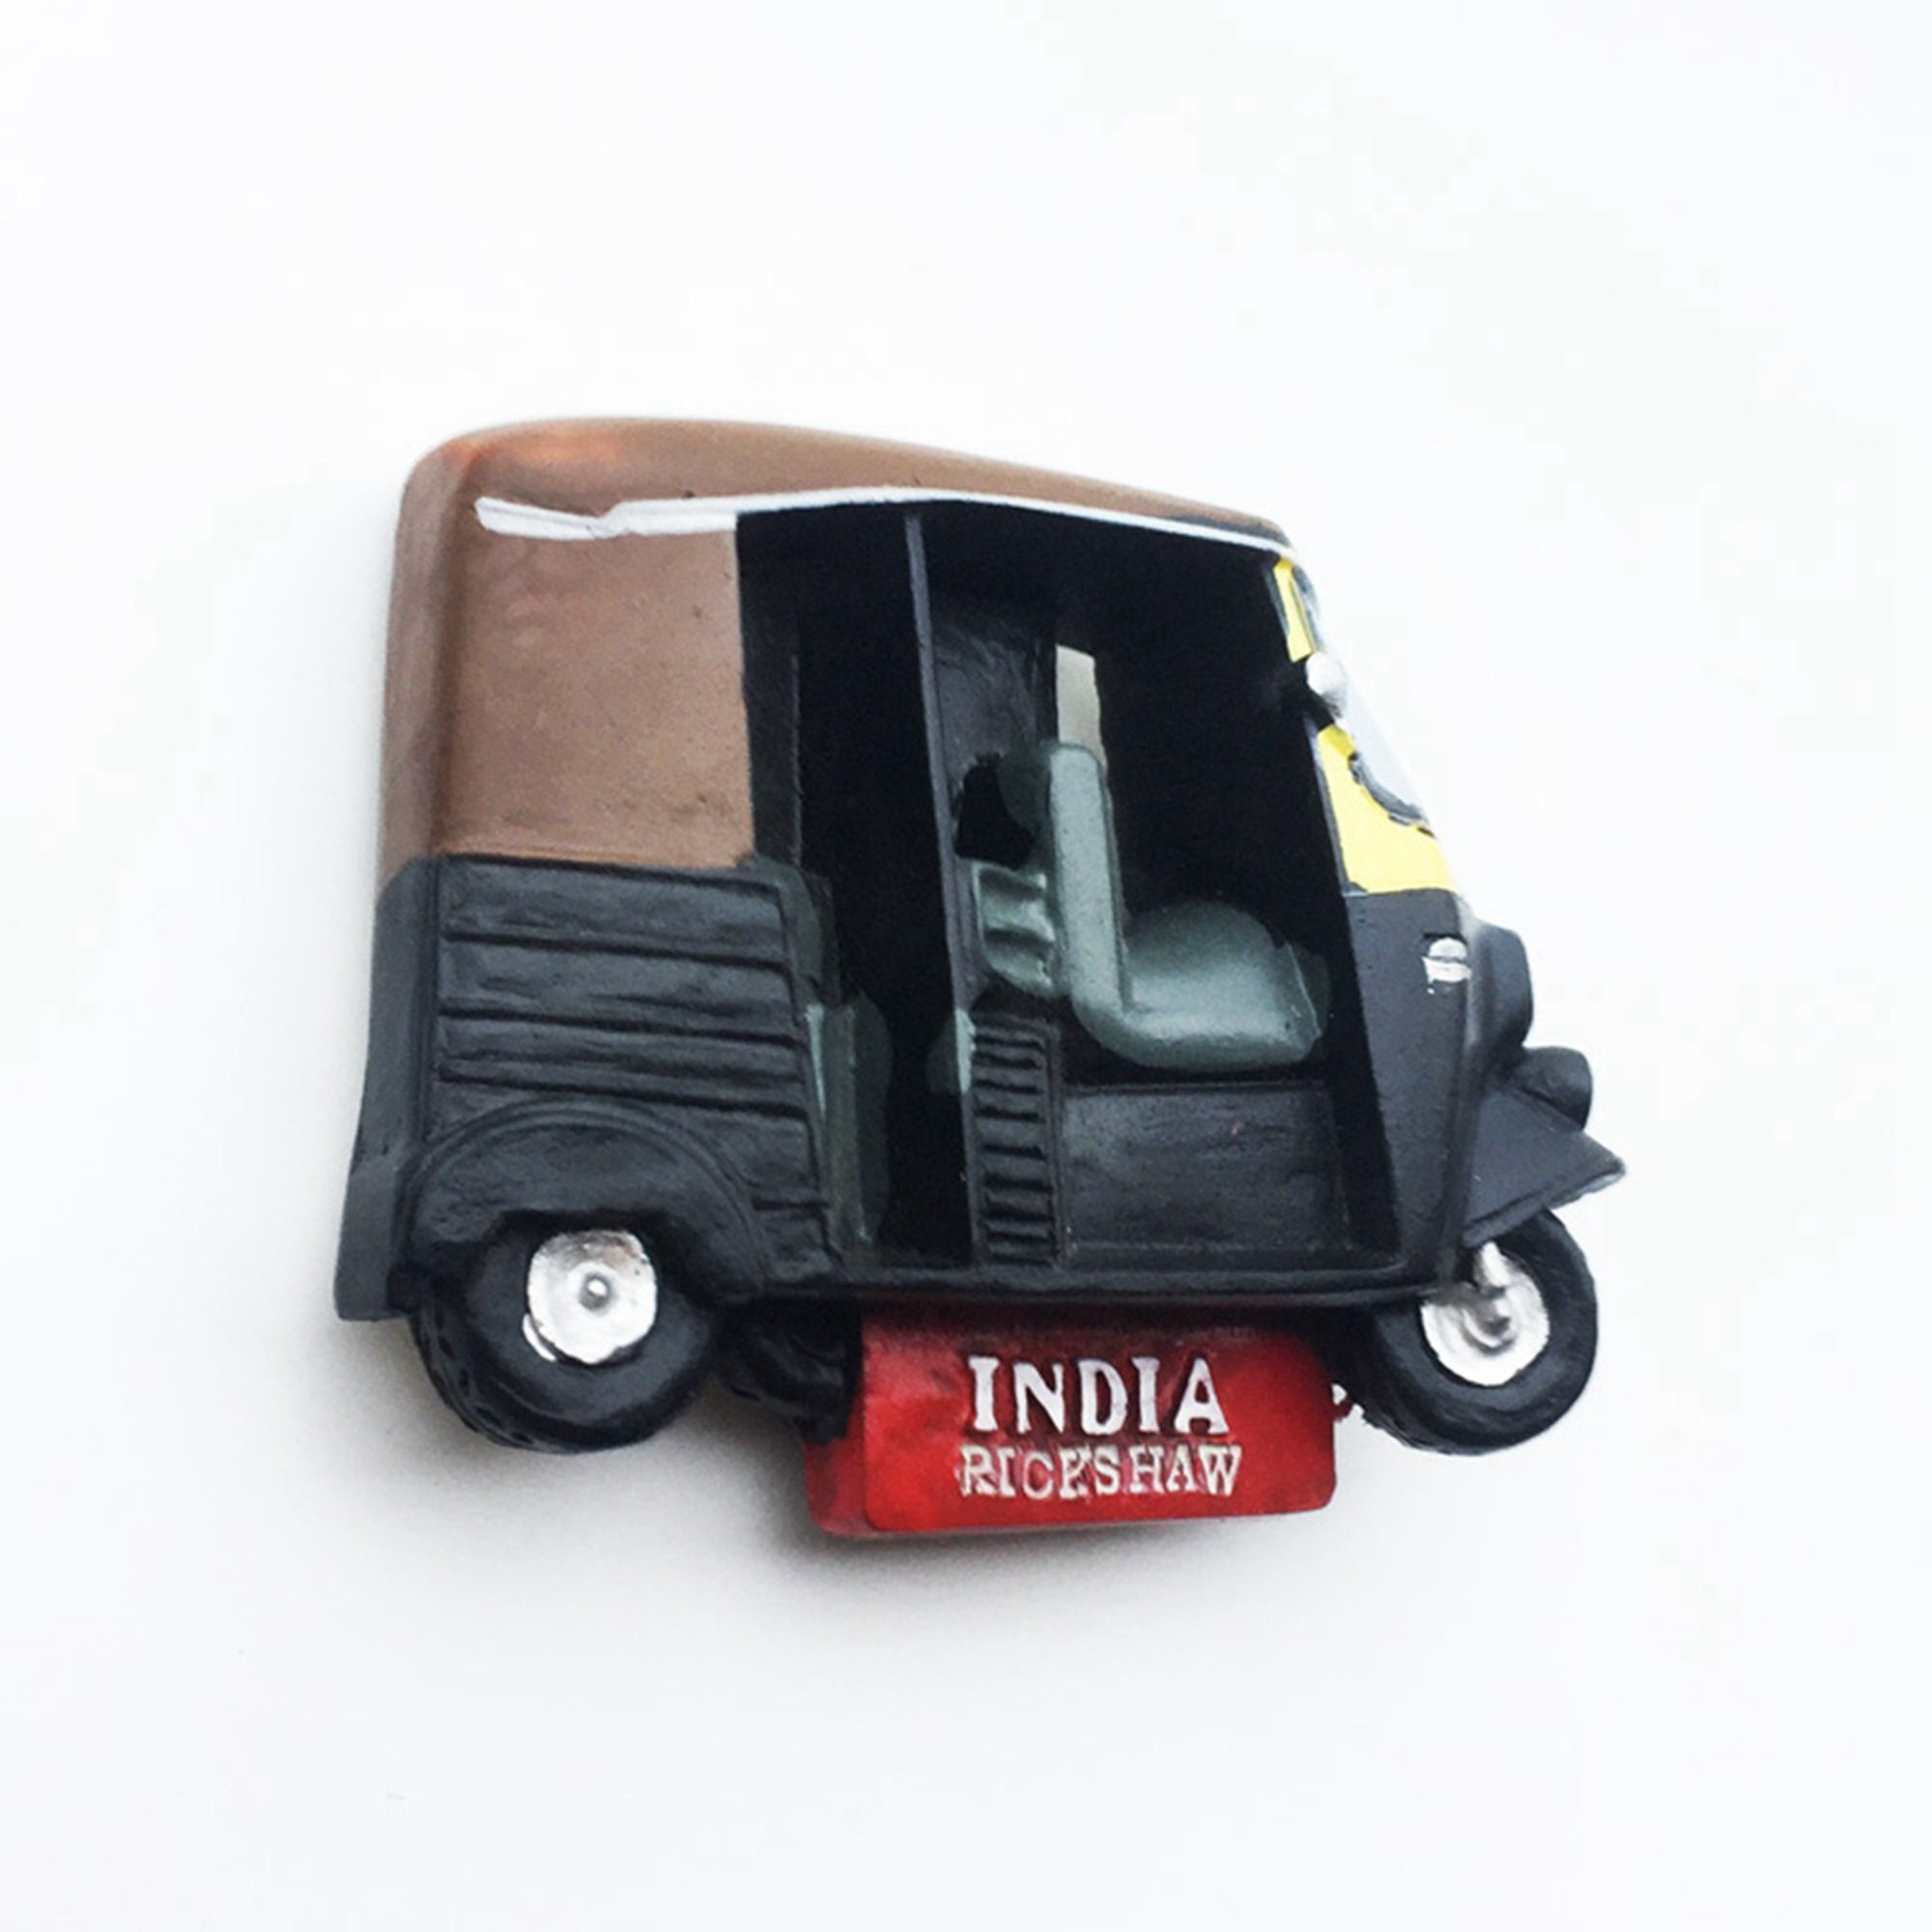 Mumbai Rickshaw India Fridge Magnet Travel Souvenir Gift